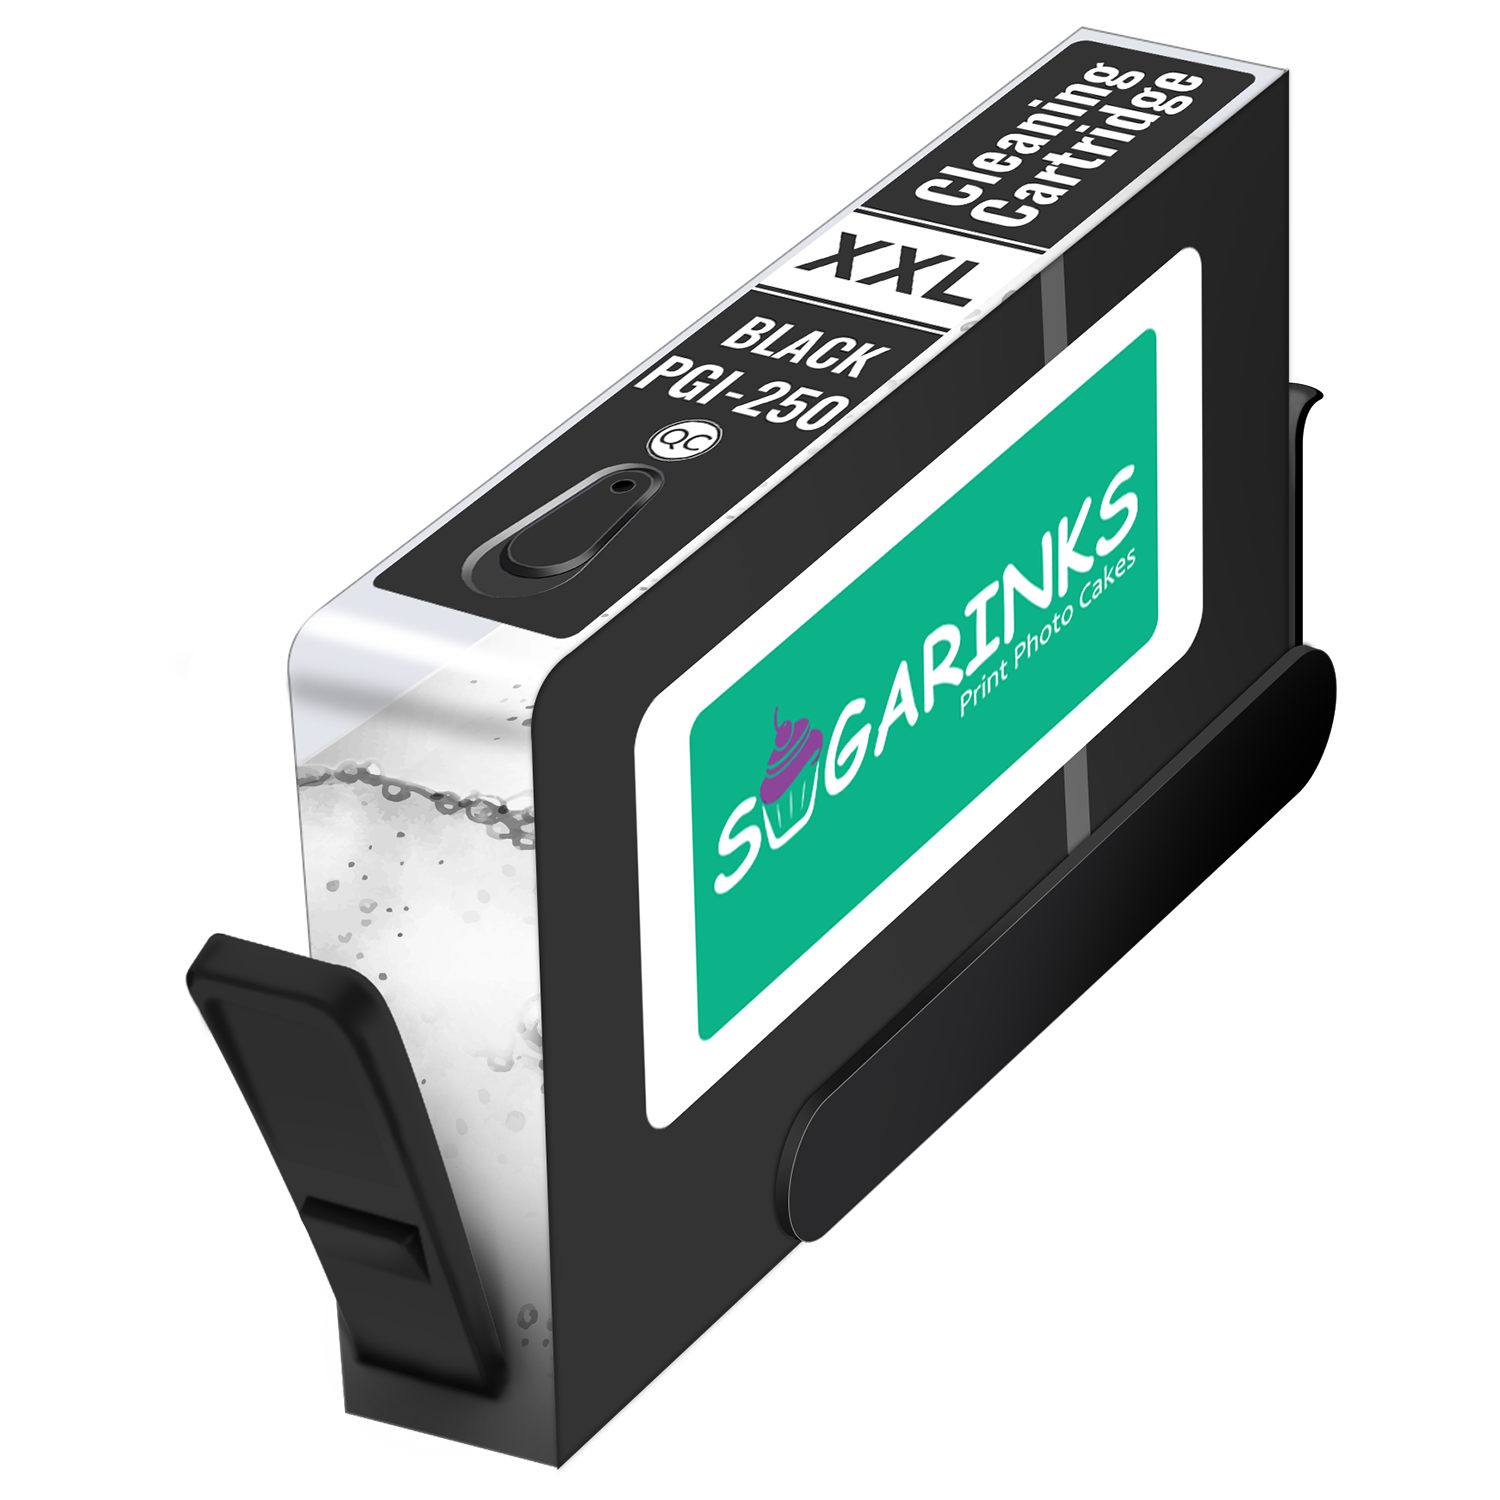 Sugarinks Edible Cleaning Cartridge PGI-250XL for Canon Edible Printer – Black